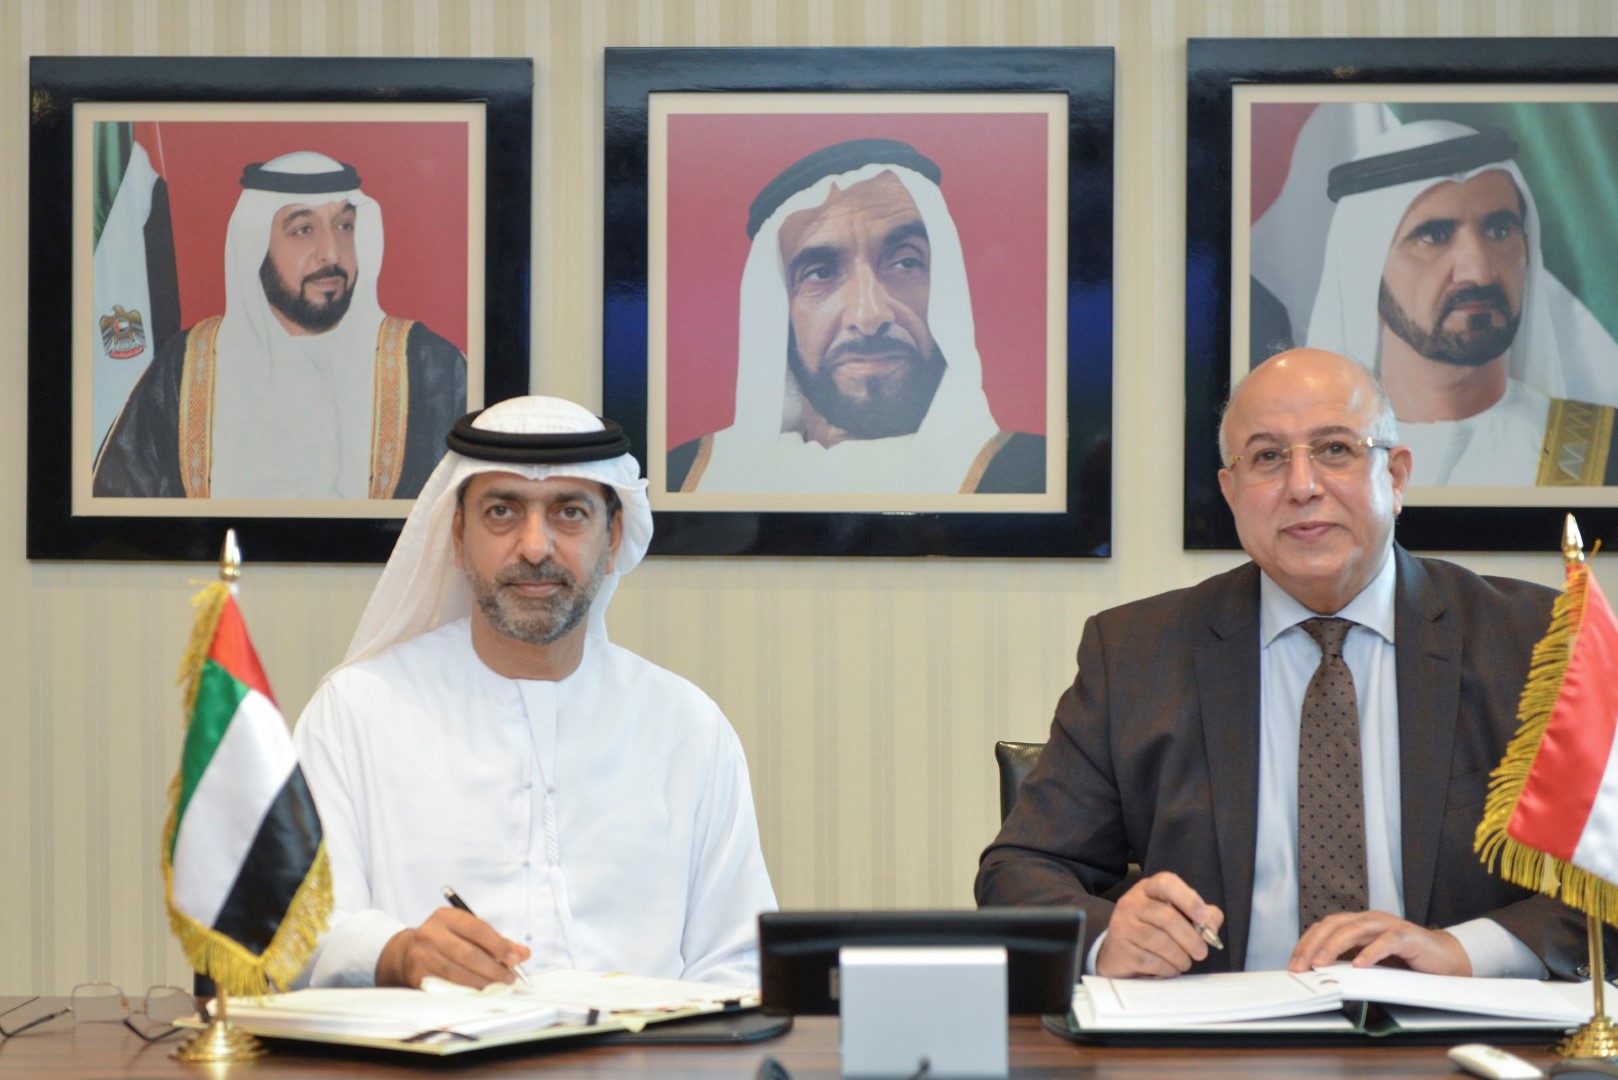 UAE and Hungary sign agreement to stimulate sustainable economic development